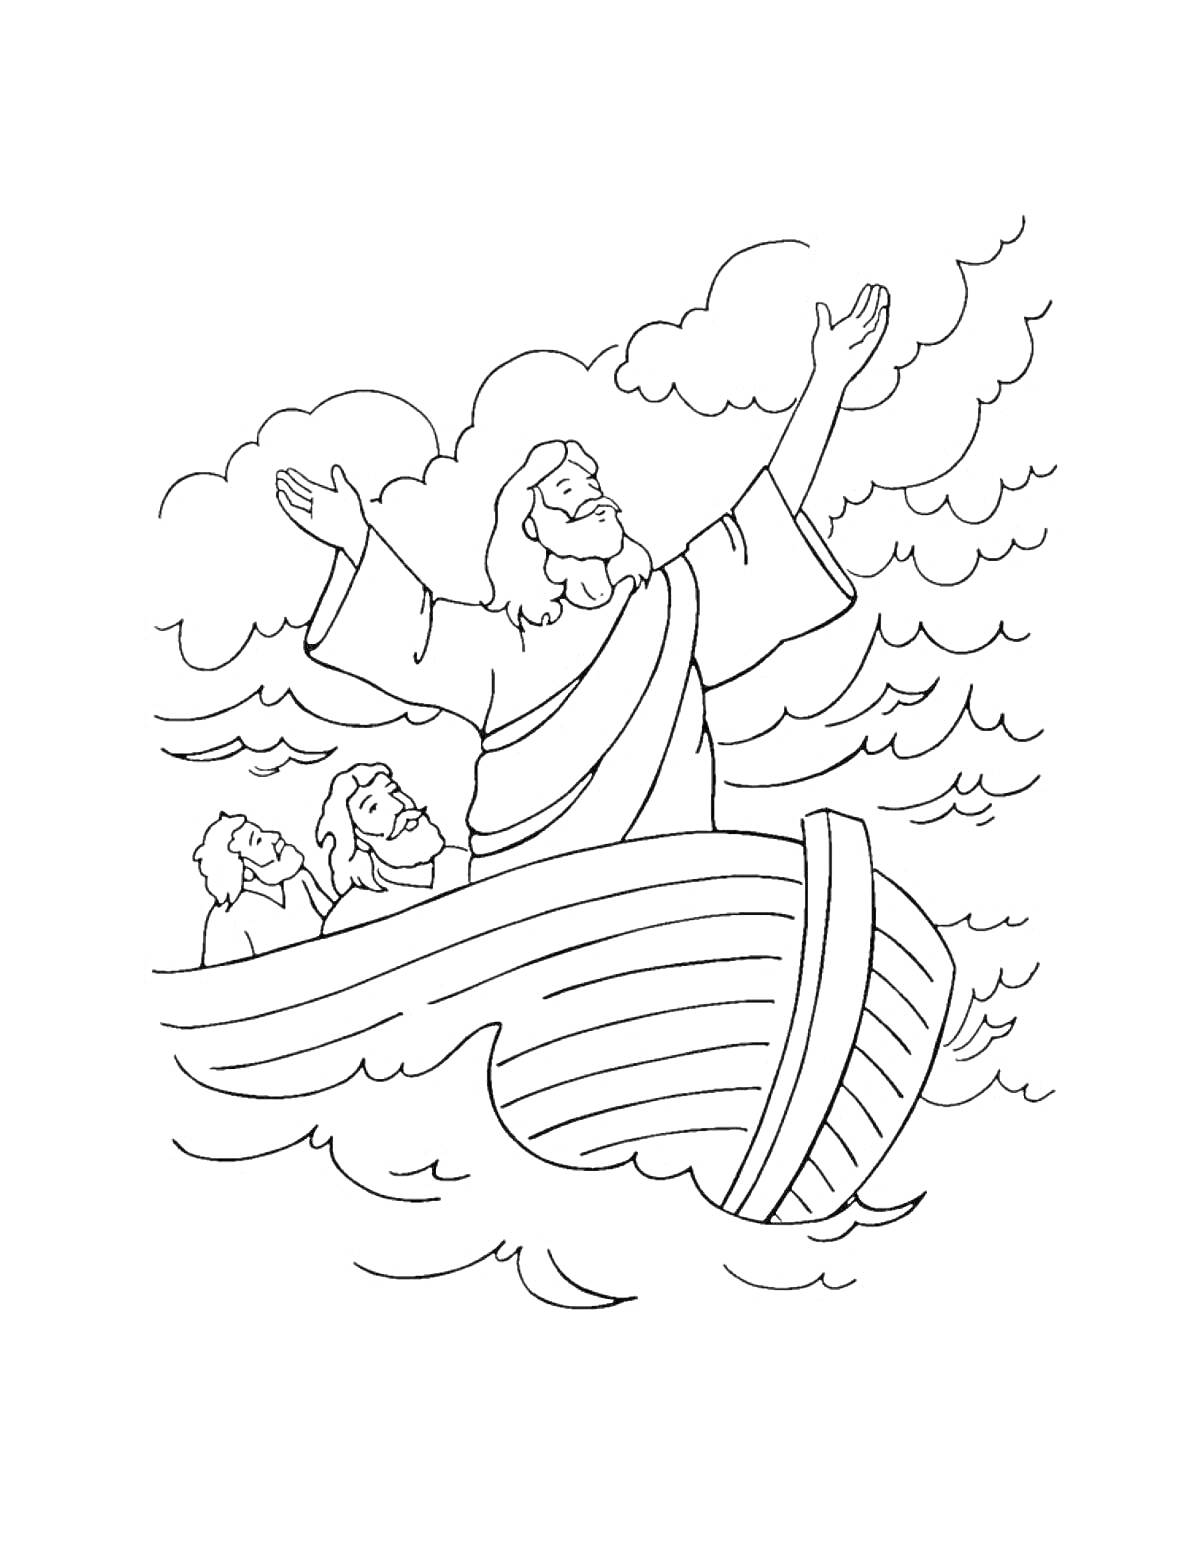 На раскраске изображено: Садко, Лодка, Море, Волны, Спутники, Облака, Буря